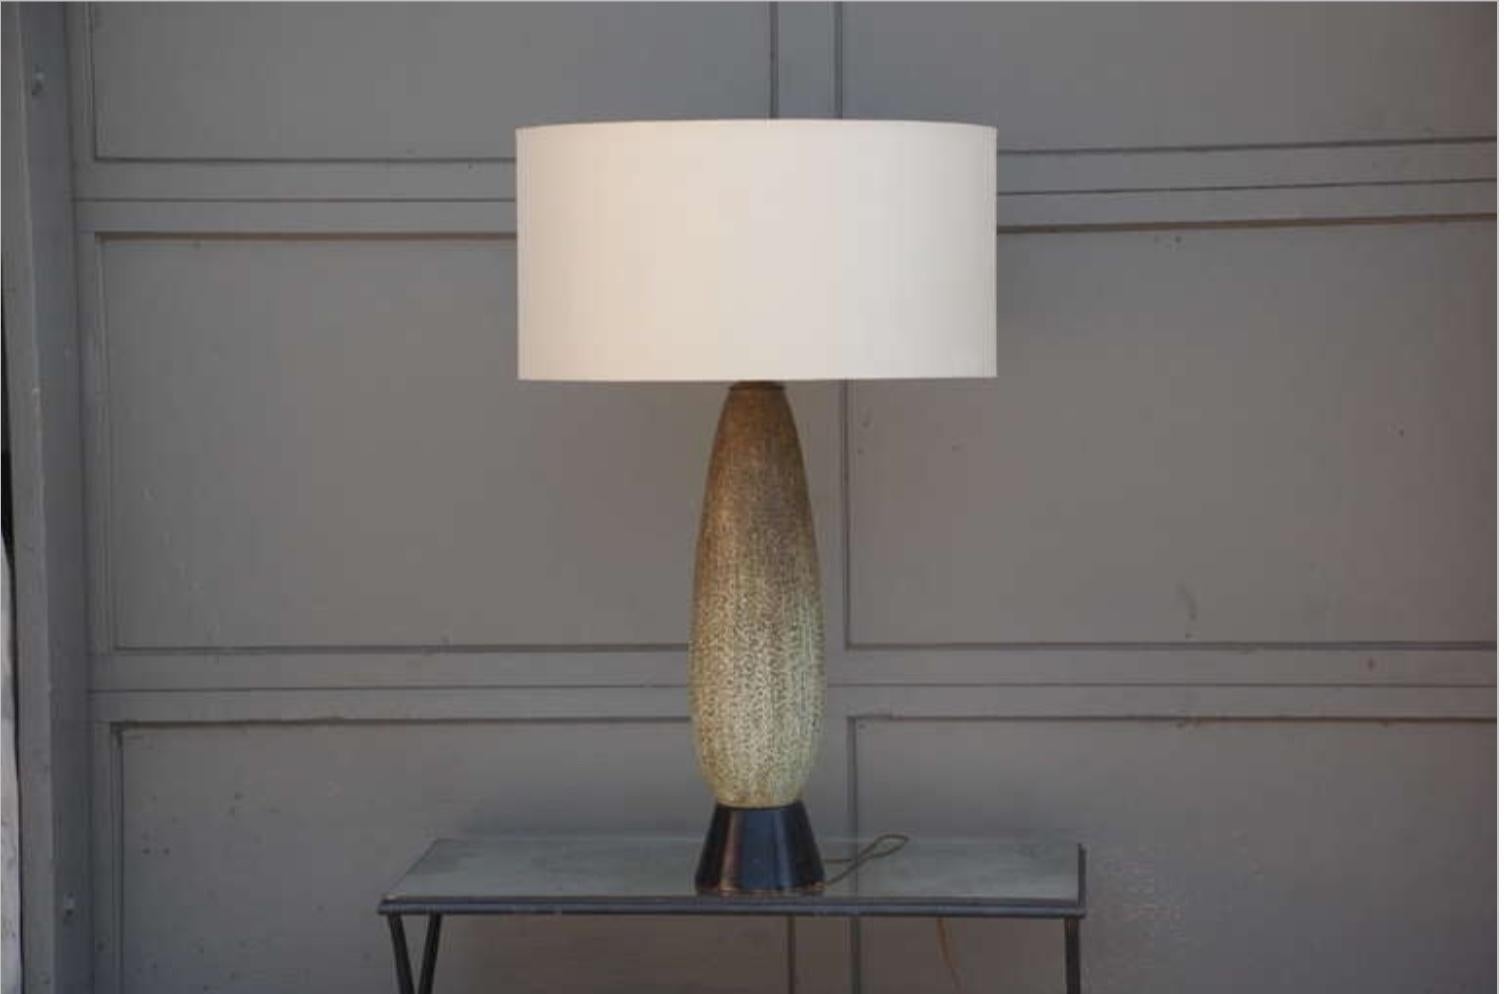 Chic heavy studio ceramic oblong lamp. Rewired.

Shade dimensions: 11 in. tall x 22 in. diameter.